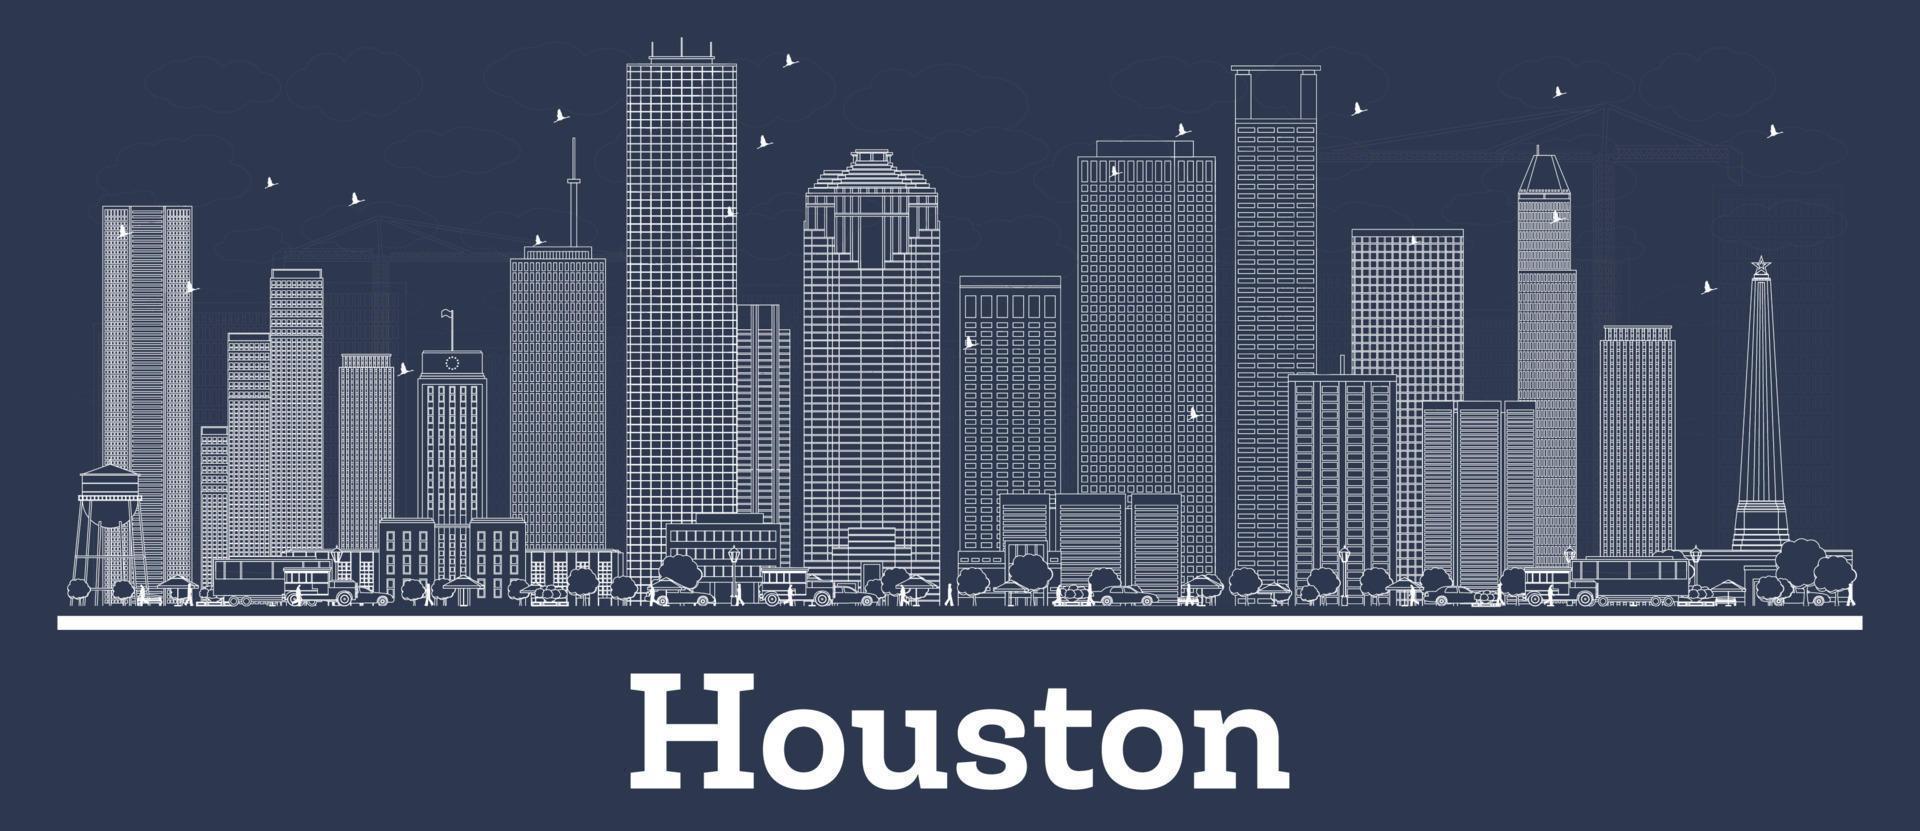 Outline Houston Texas City Skyline with White Buildings. vector